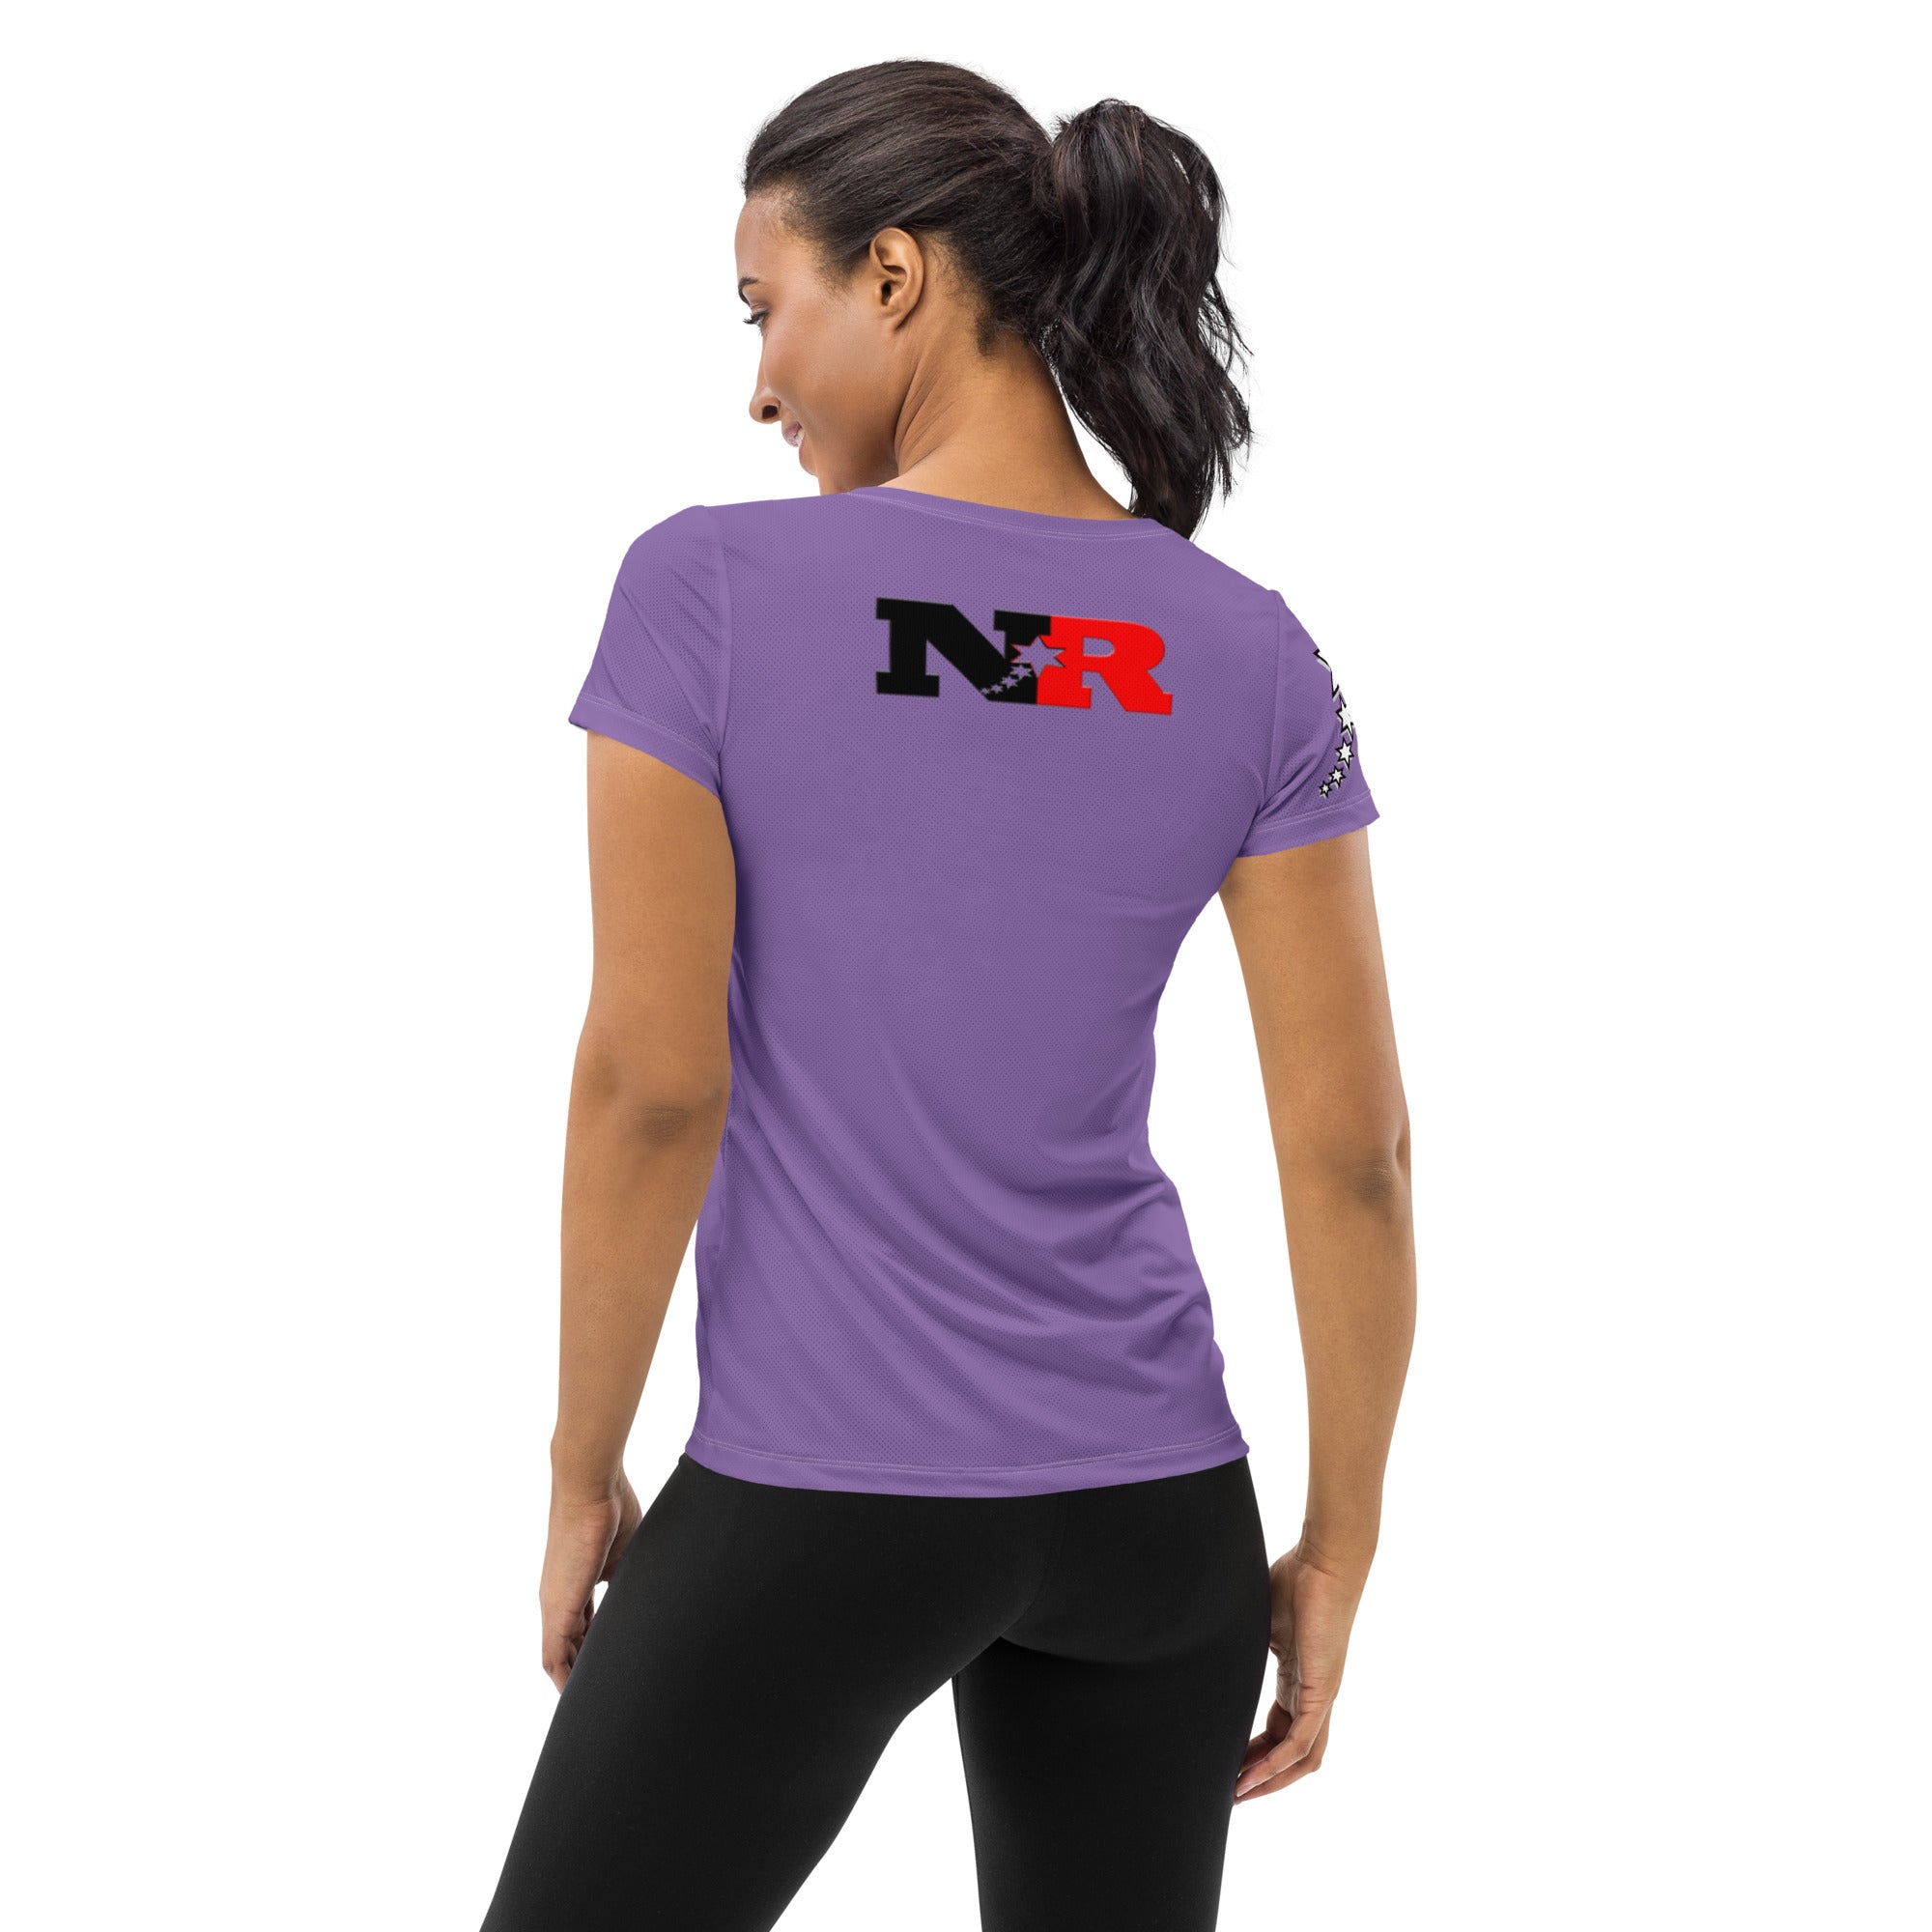 Know Thyself - Women's Athletic T-shirt